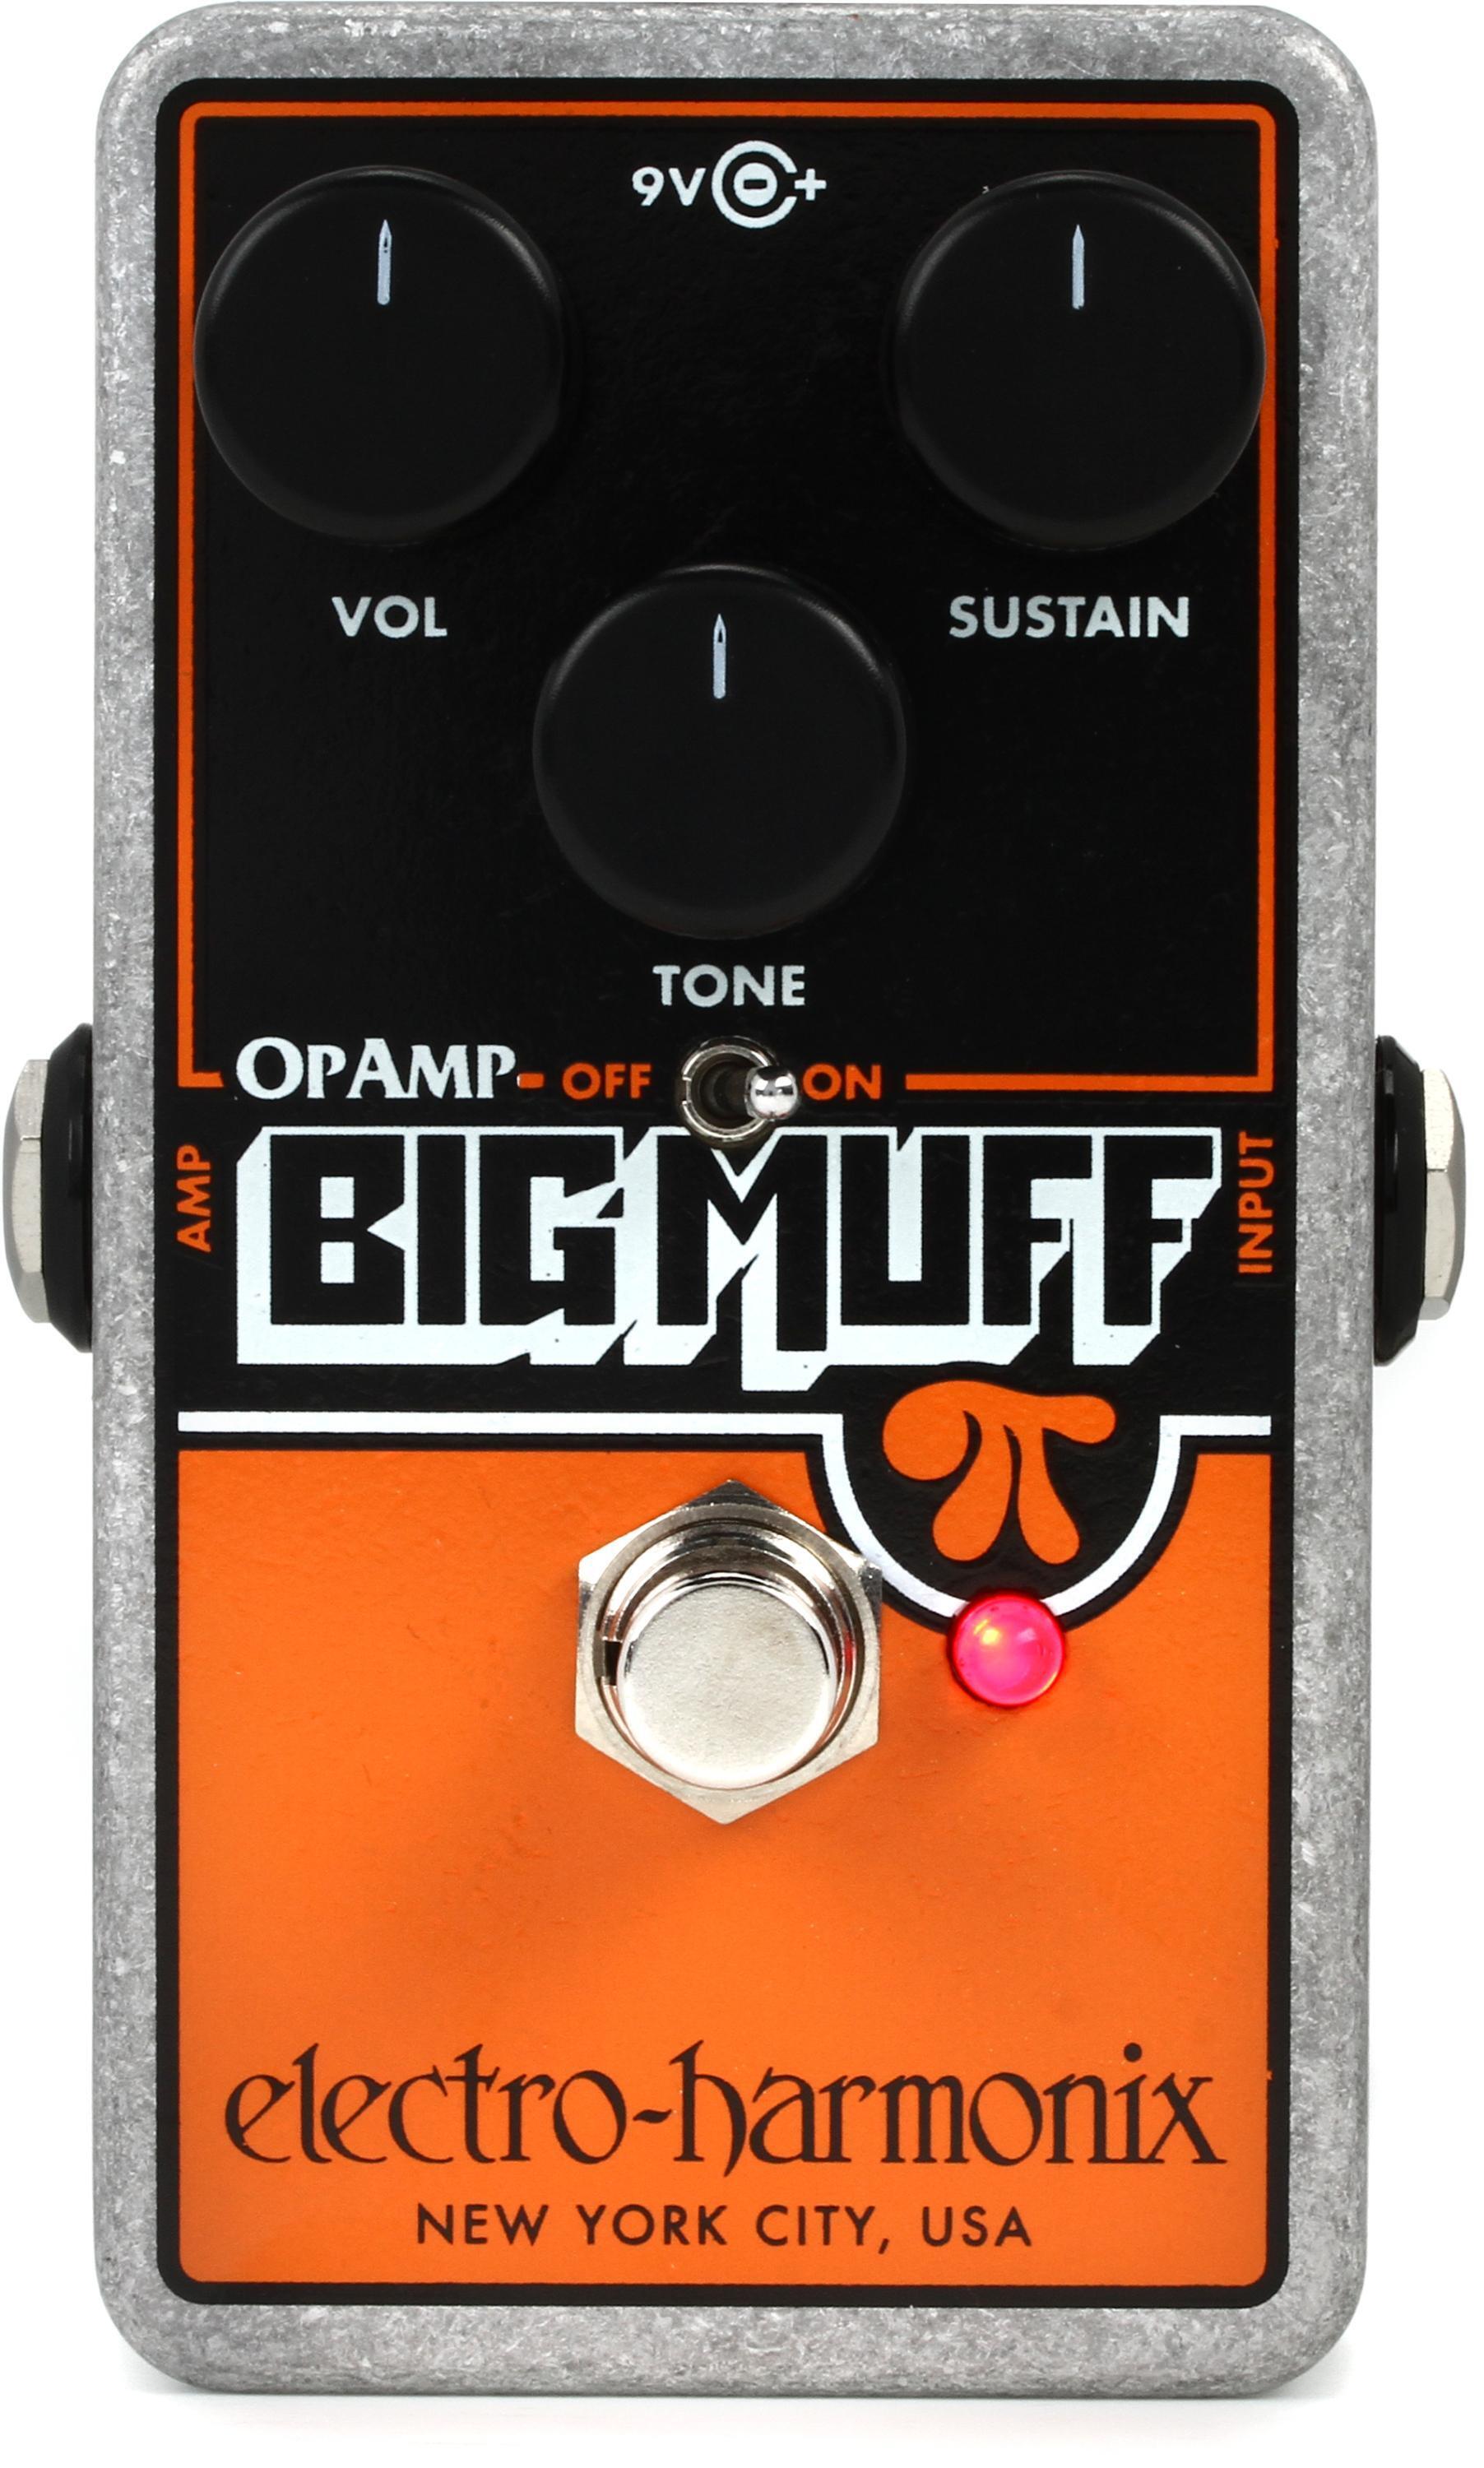 Electro-Harmonix Op-amp Big Muff Pi Fuzz Pedal | Sweetwater